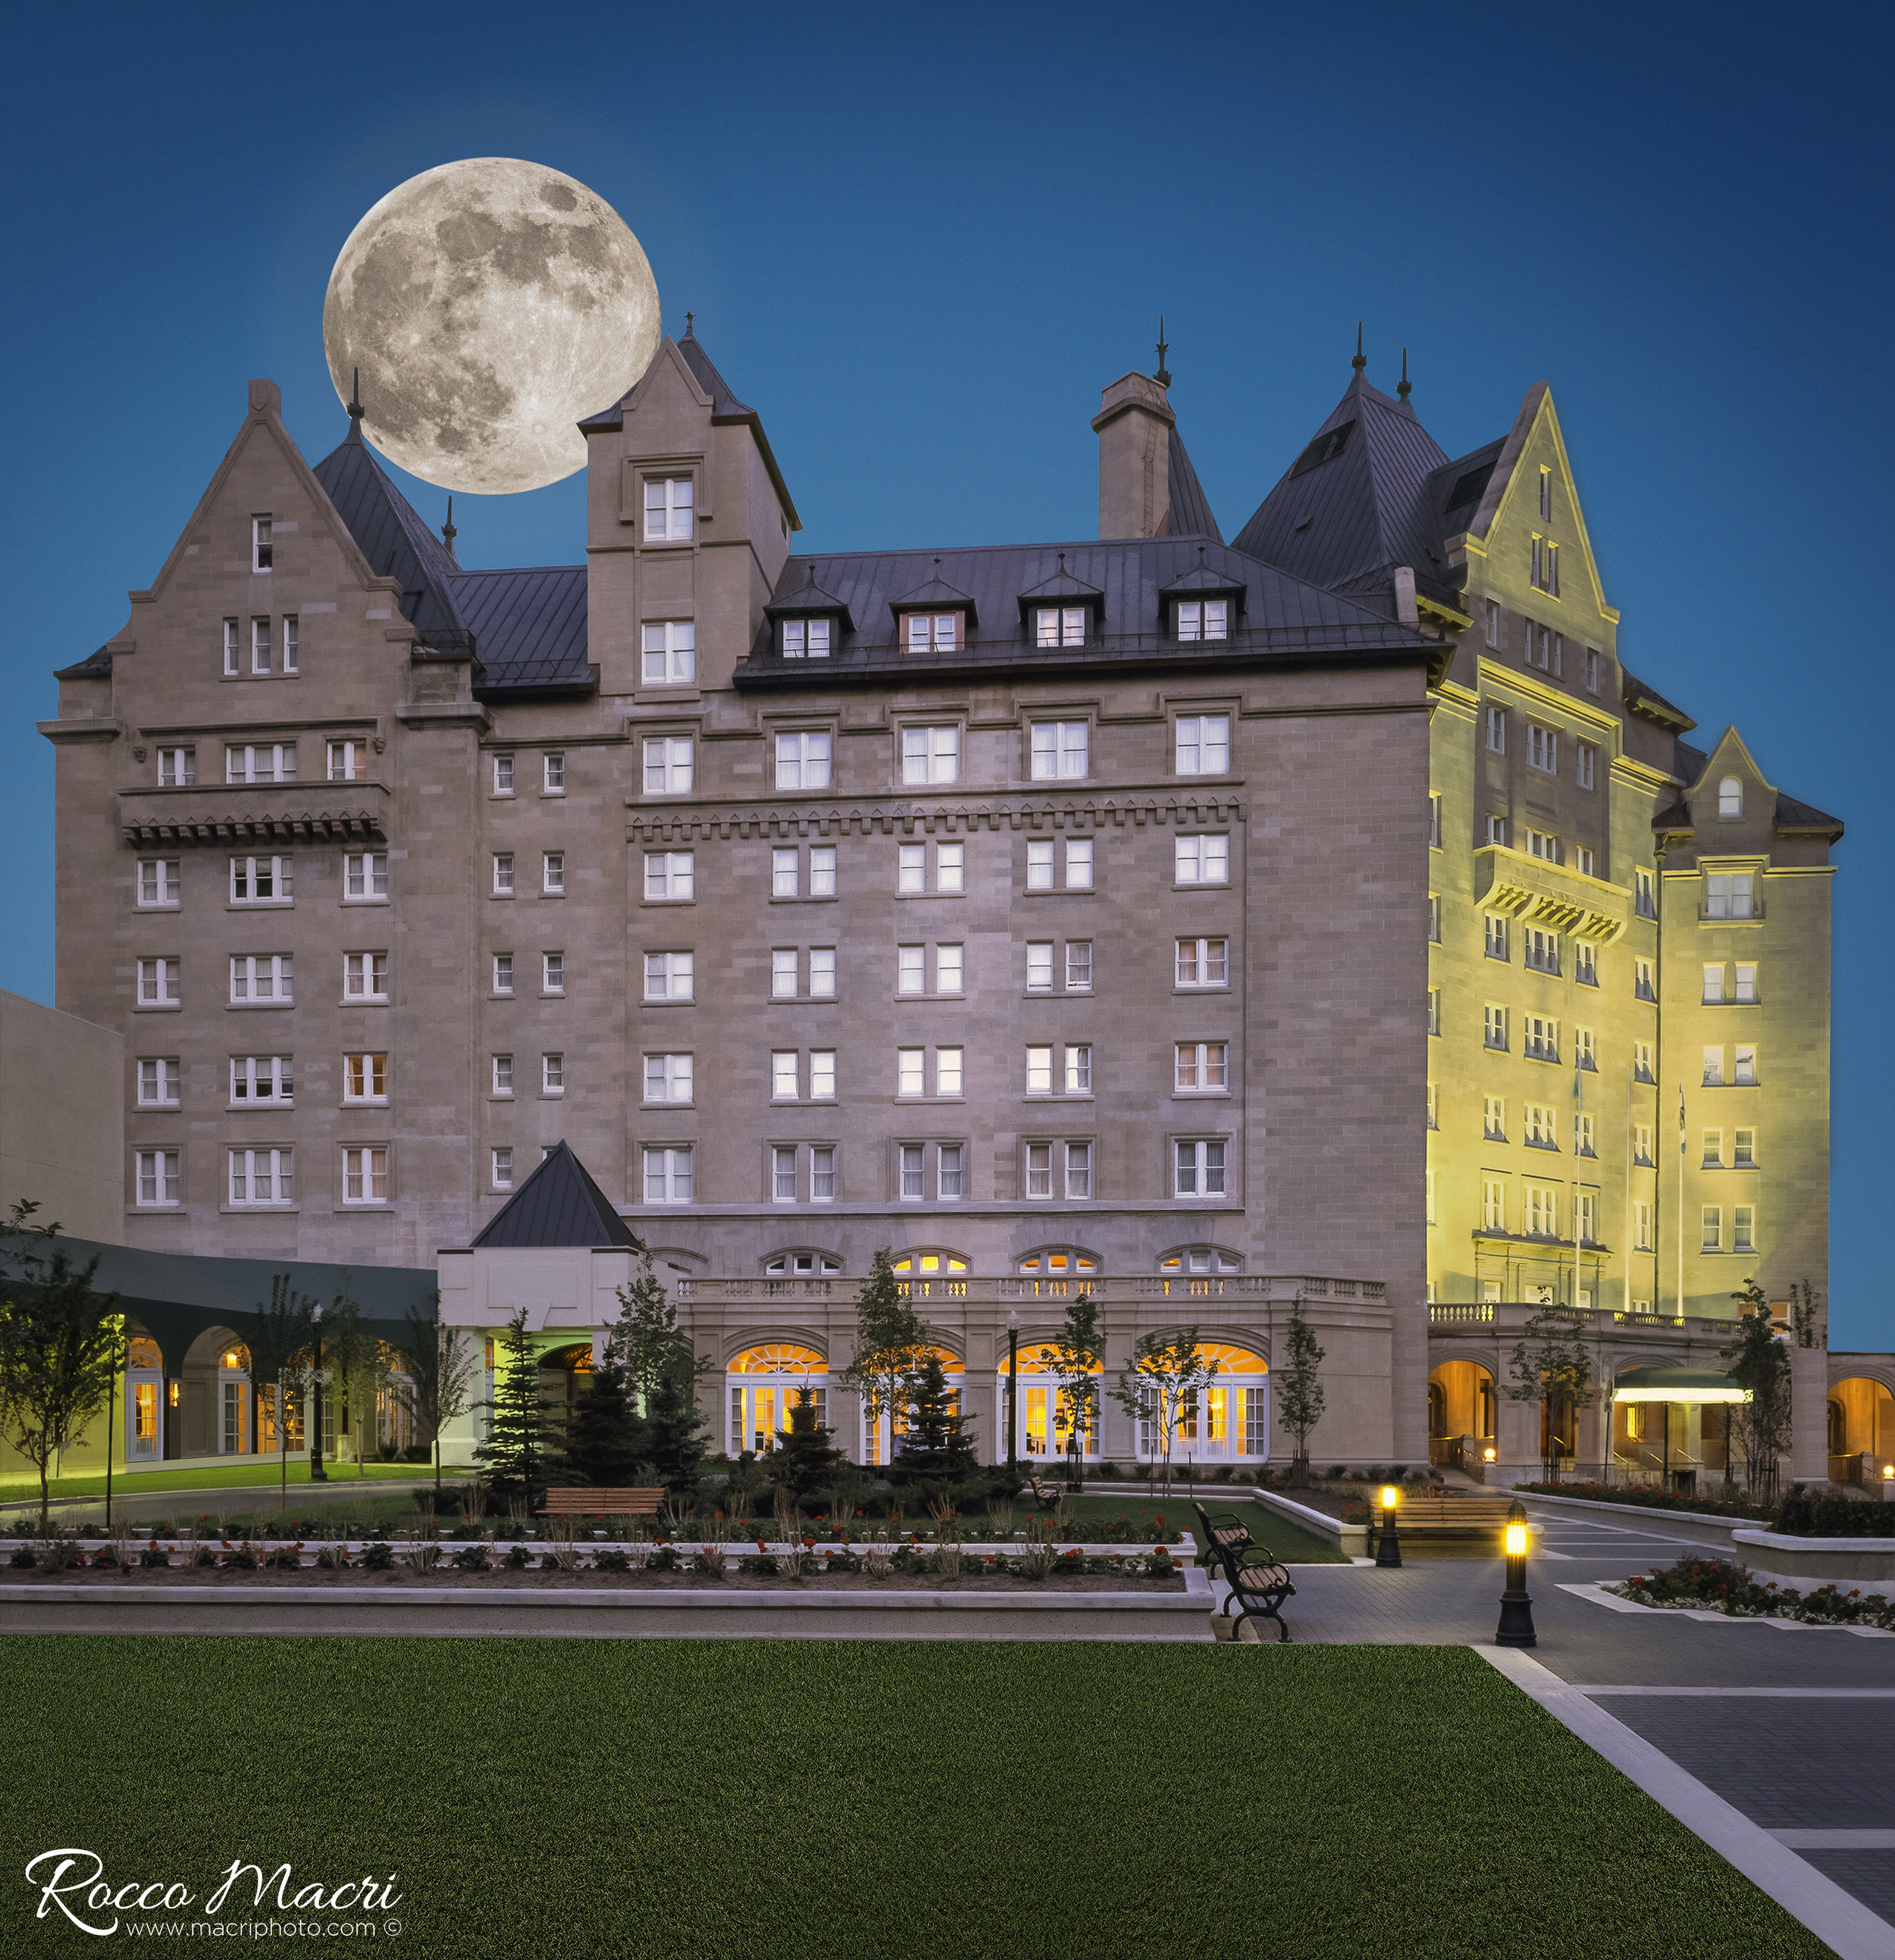 Hotel MacDonald-super moon-Global News©.jpg